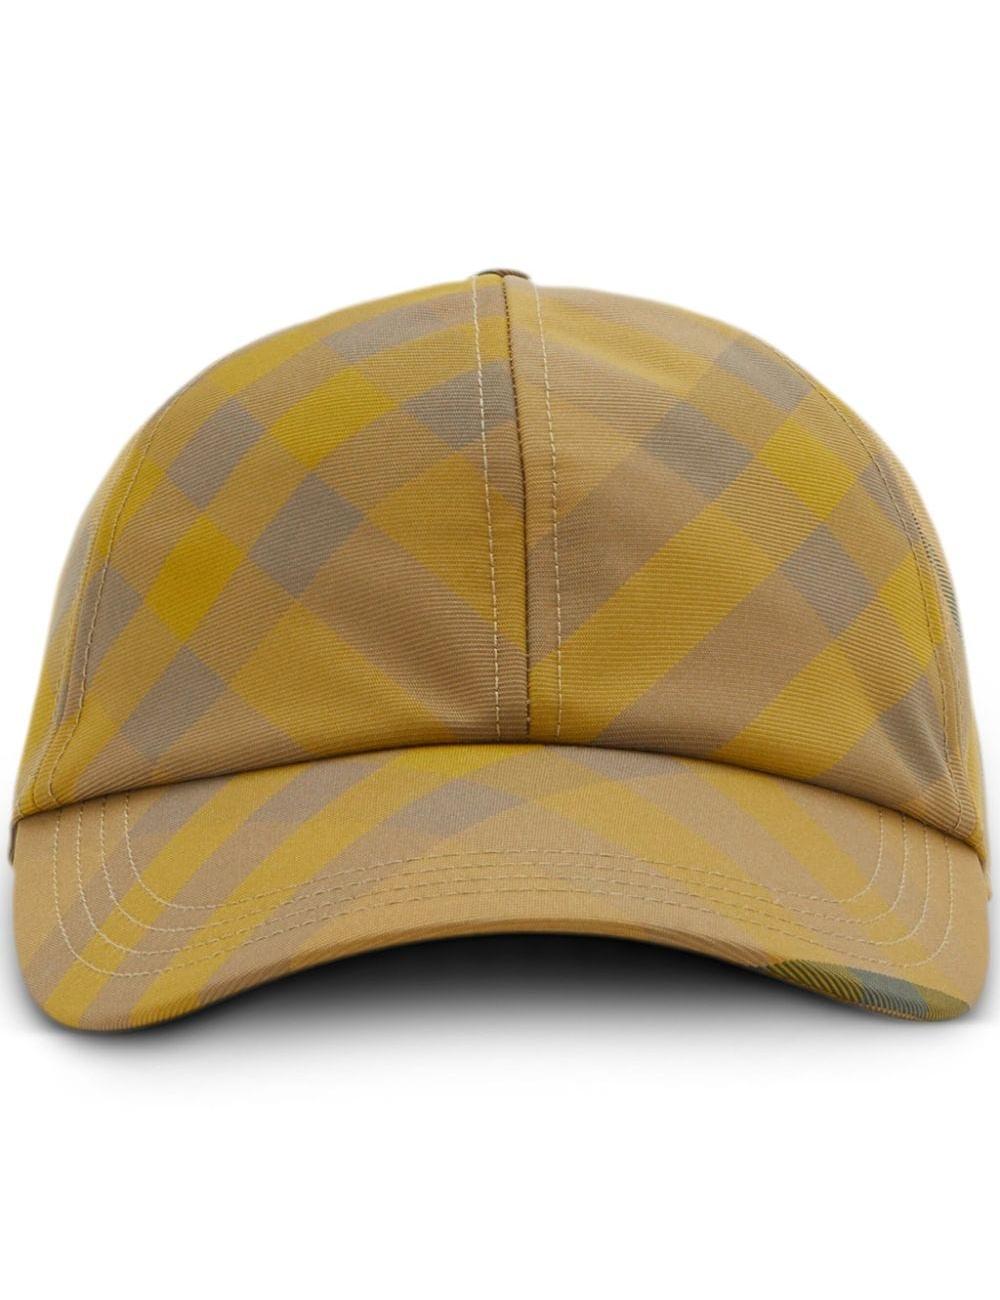 Checkered baseball cap